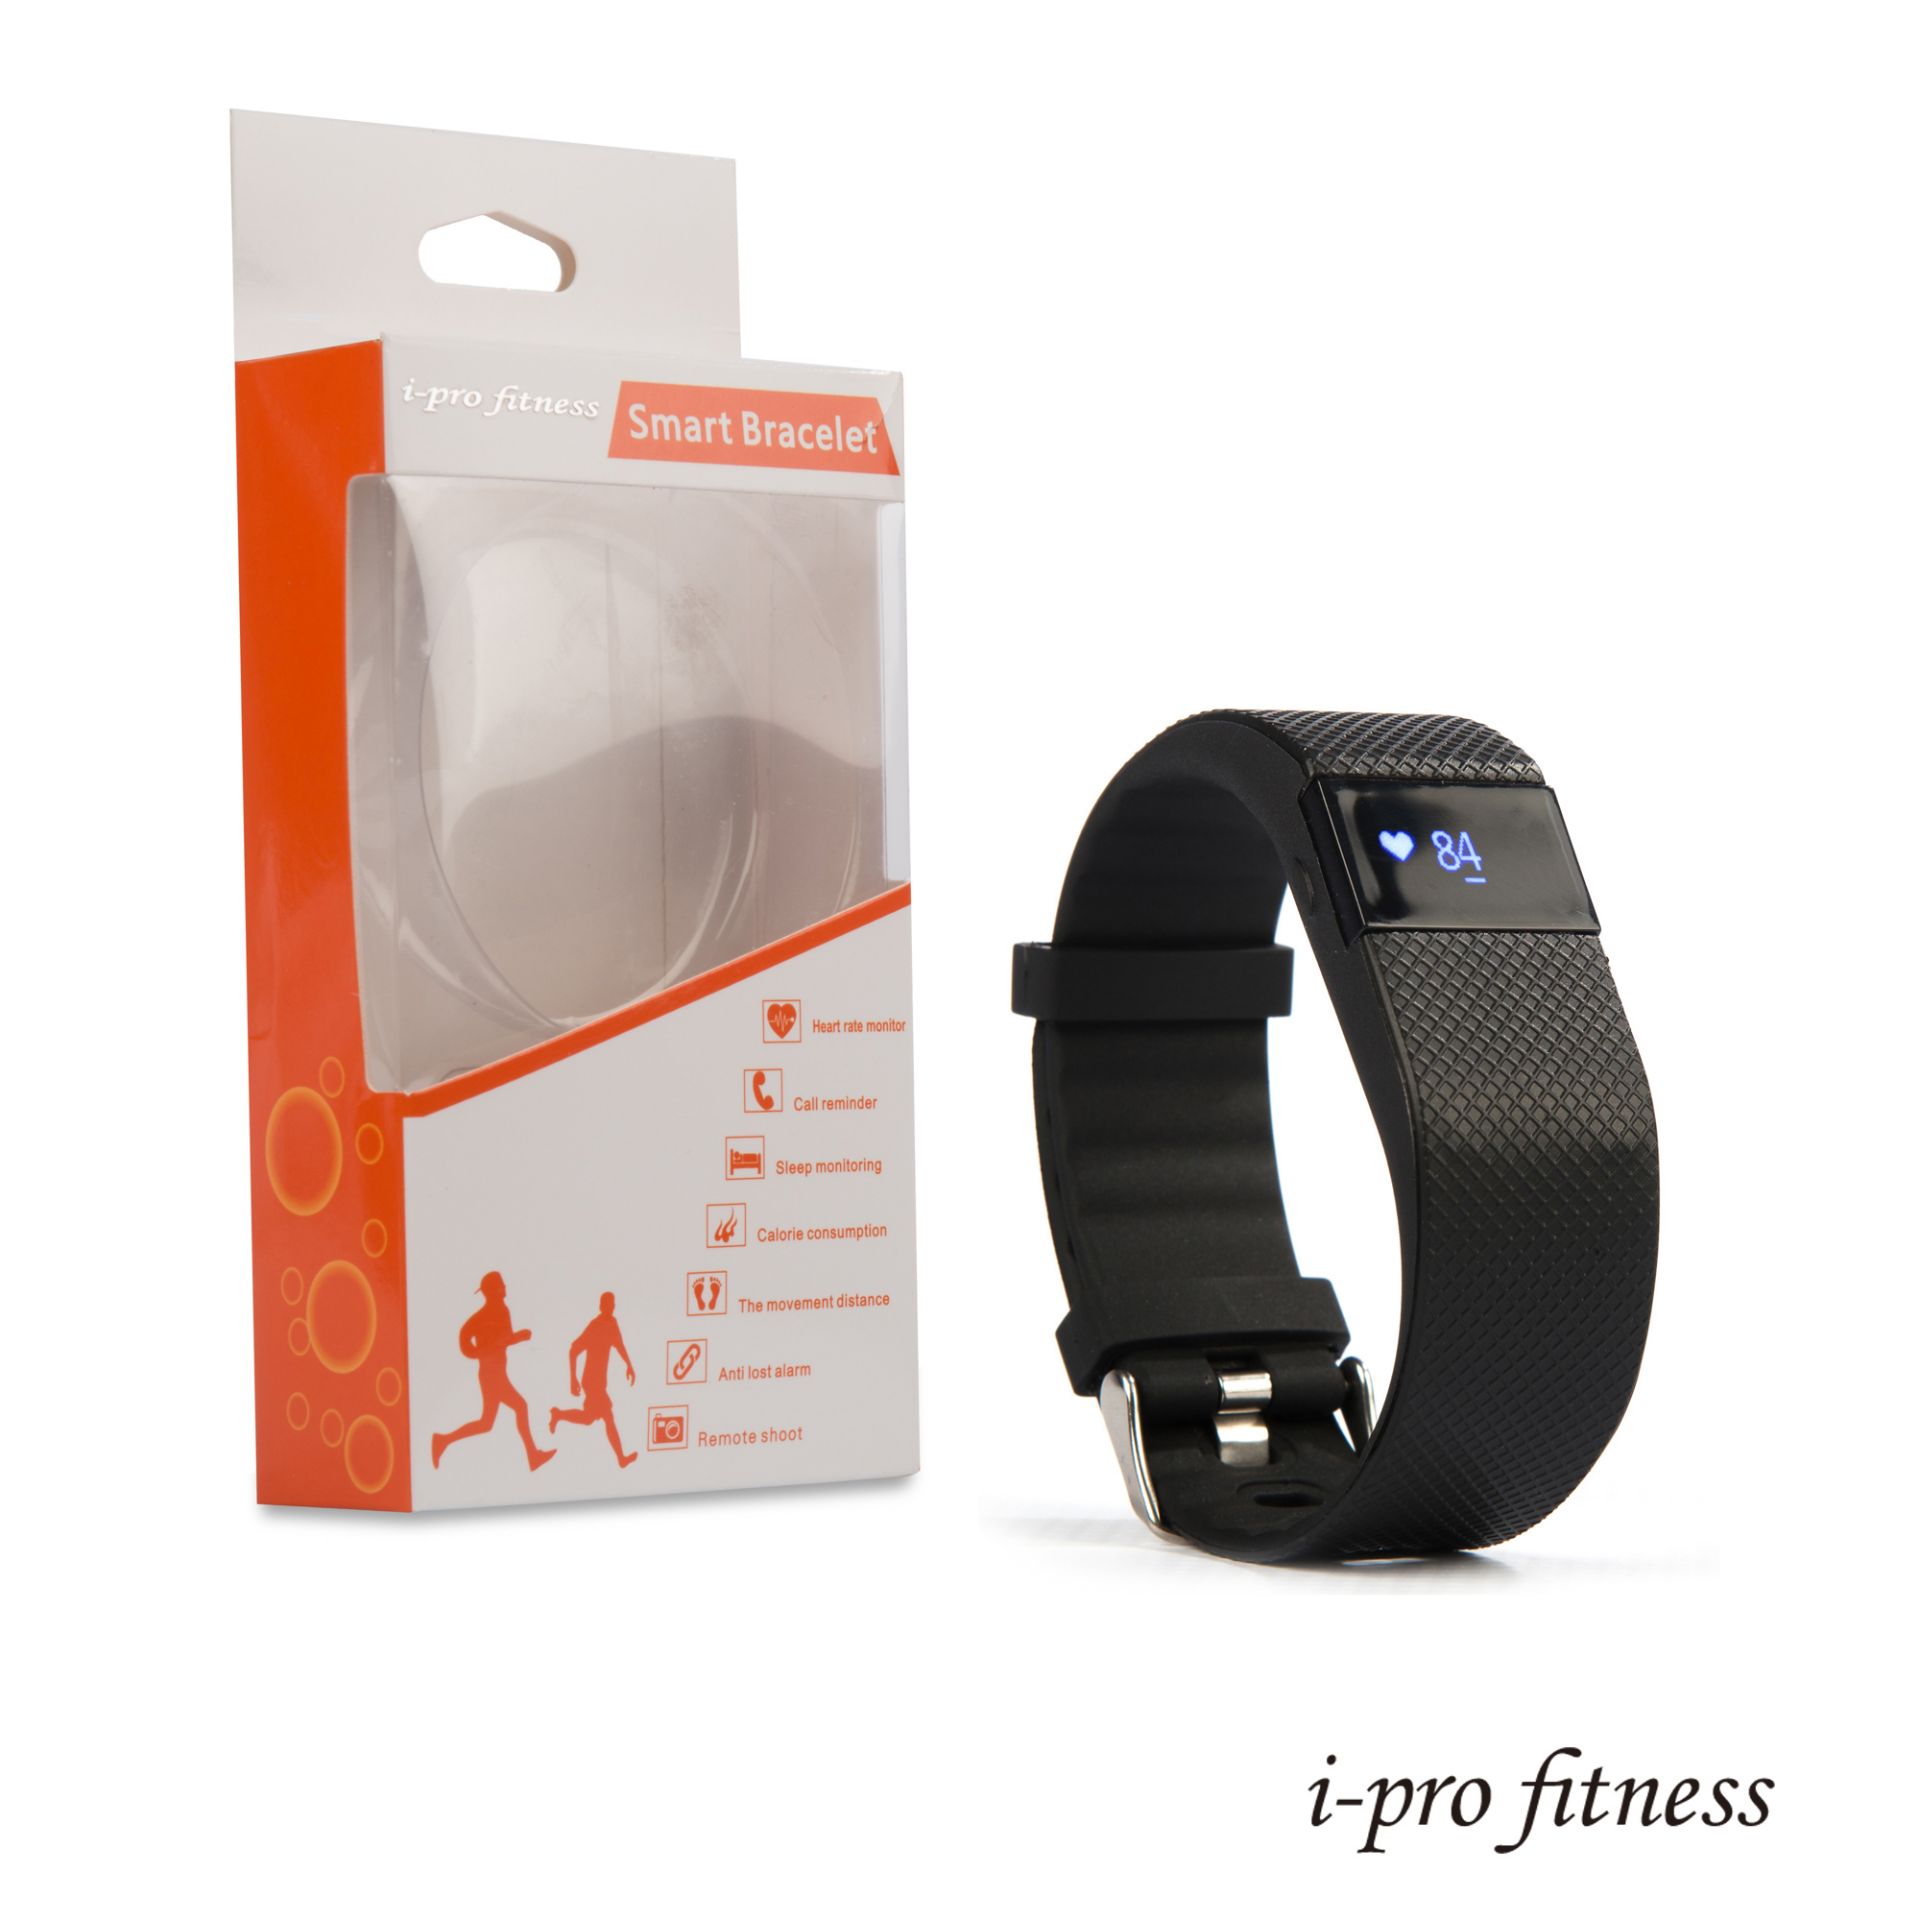 10x Fitness Tracker i-pro fitness, Bluetooth 4.0 Sports Smart Bracelet, Heart Rate Monitor - Image 3 of 8